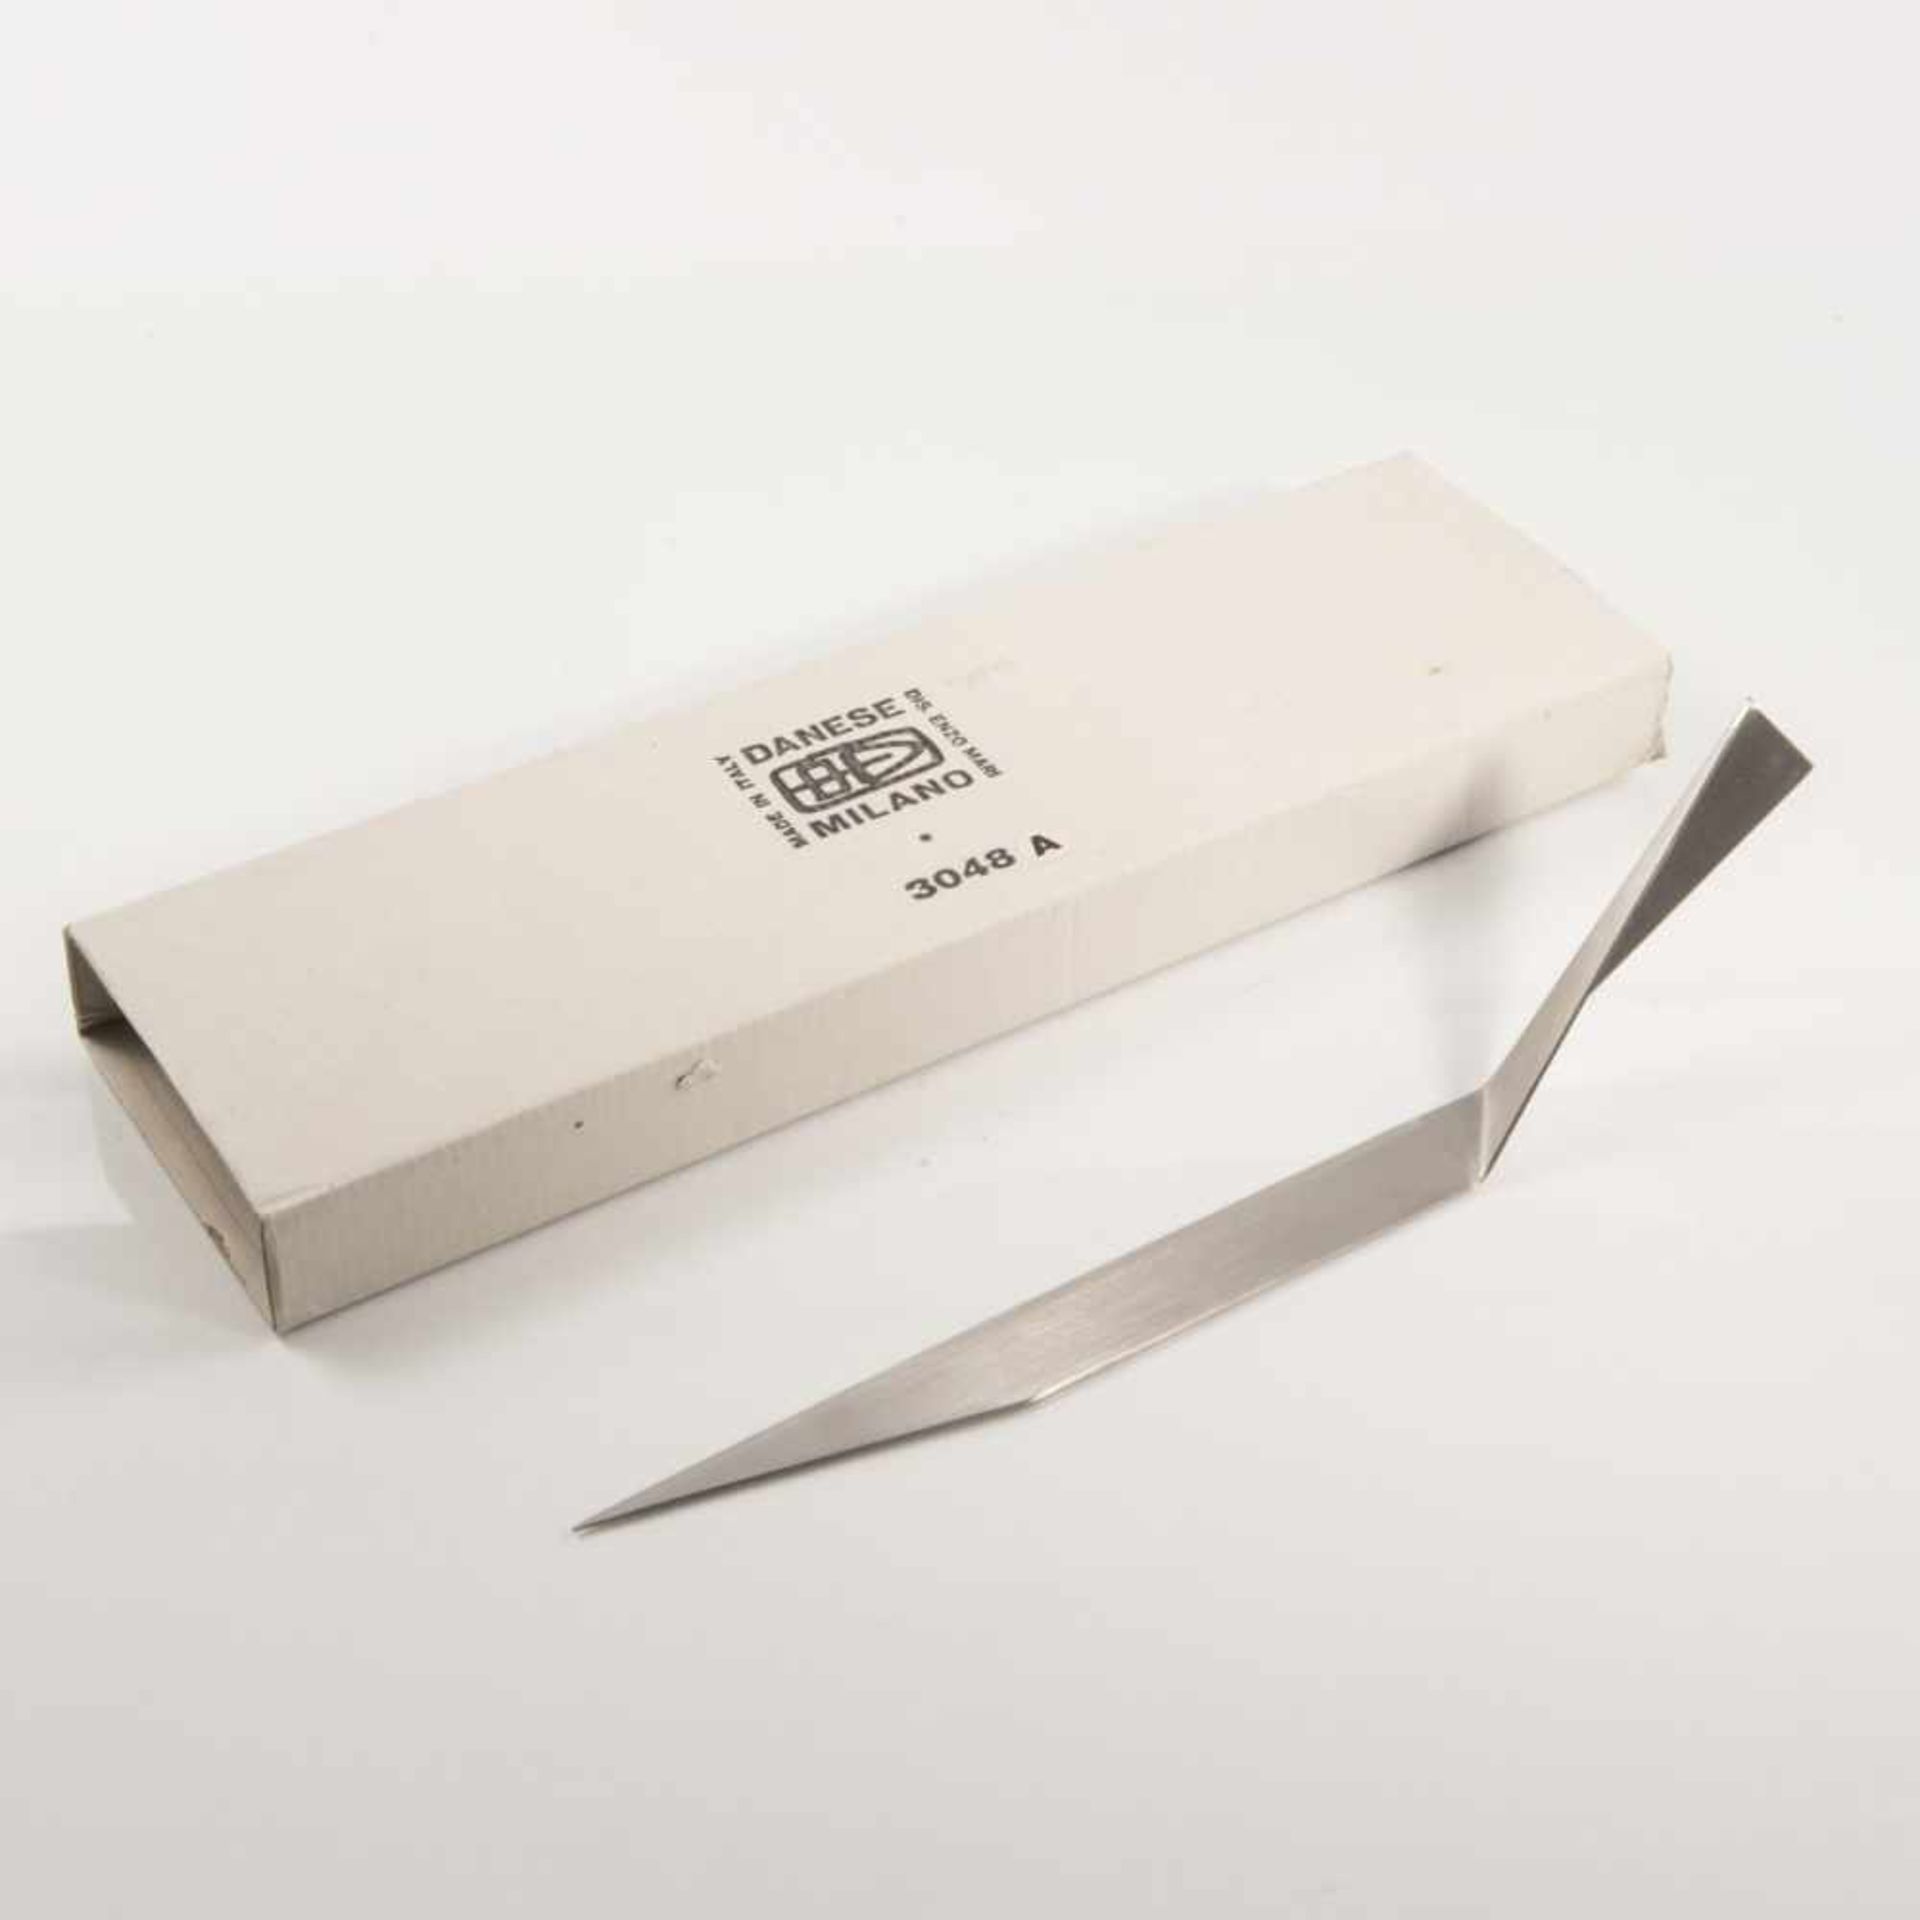 Enzo Mari, 'Benbecula' paper knife, 1961Enzo Mari, 'Benbecula' paper knife, 1961, L. 32.5 cm. - Bild 2 aus 2